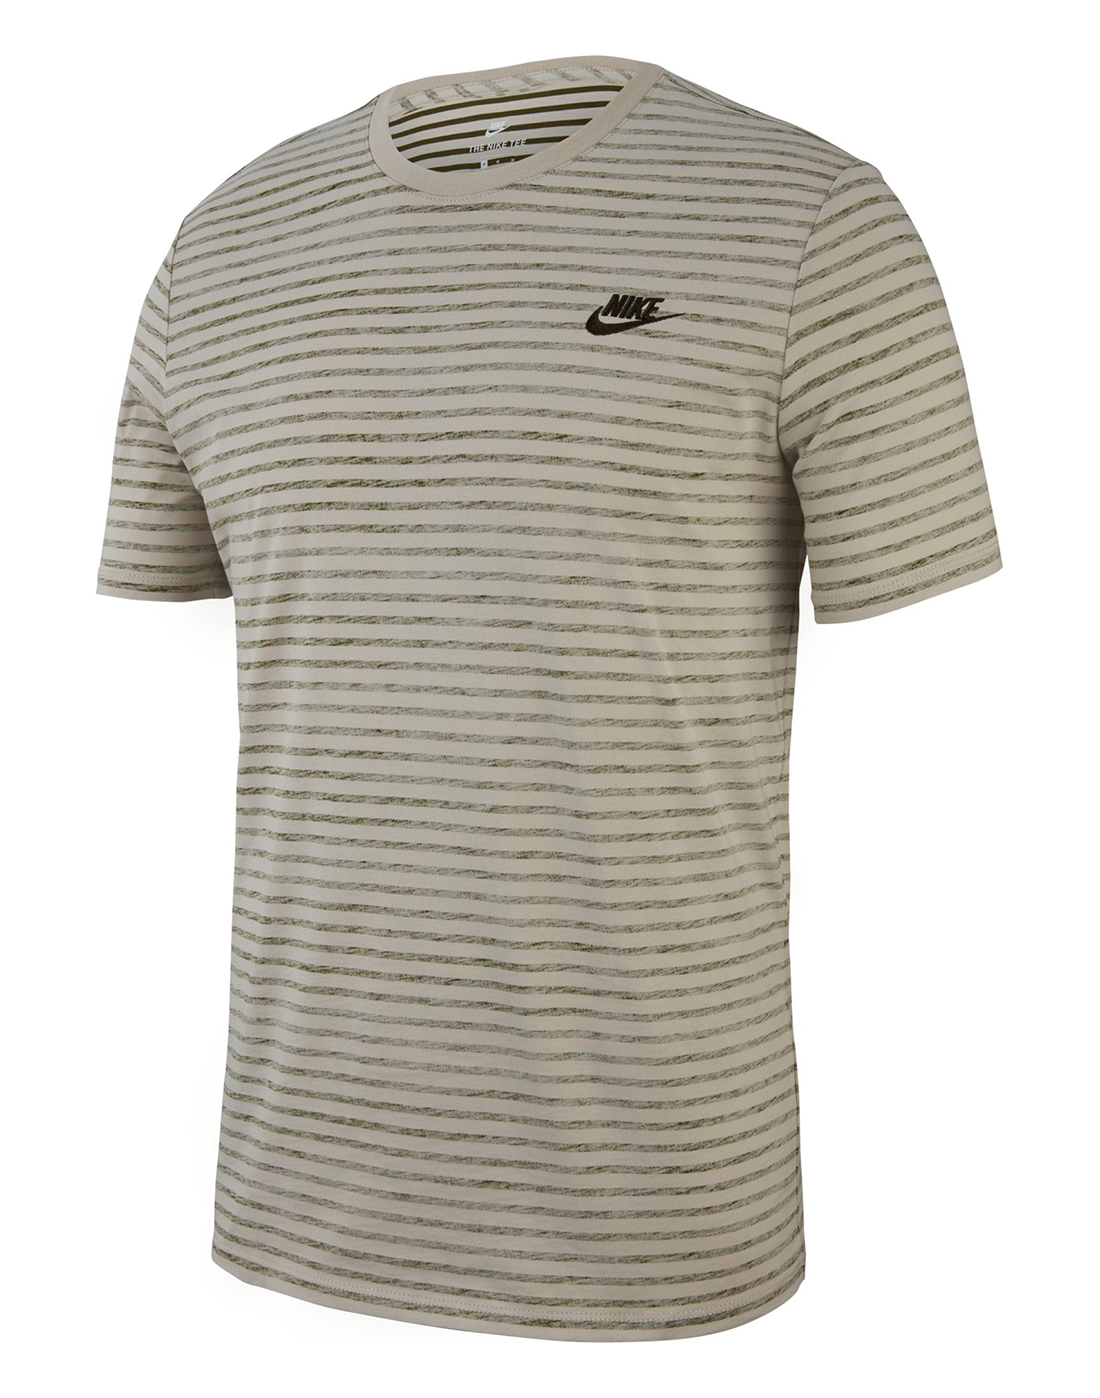 Nike Mens Striped T-Shirt - Cream | Life Style Sports IE